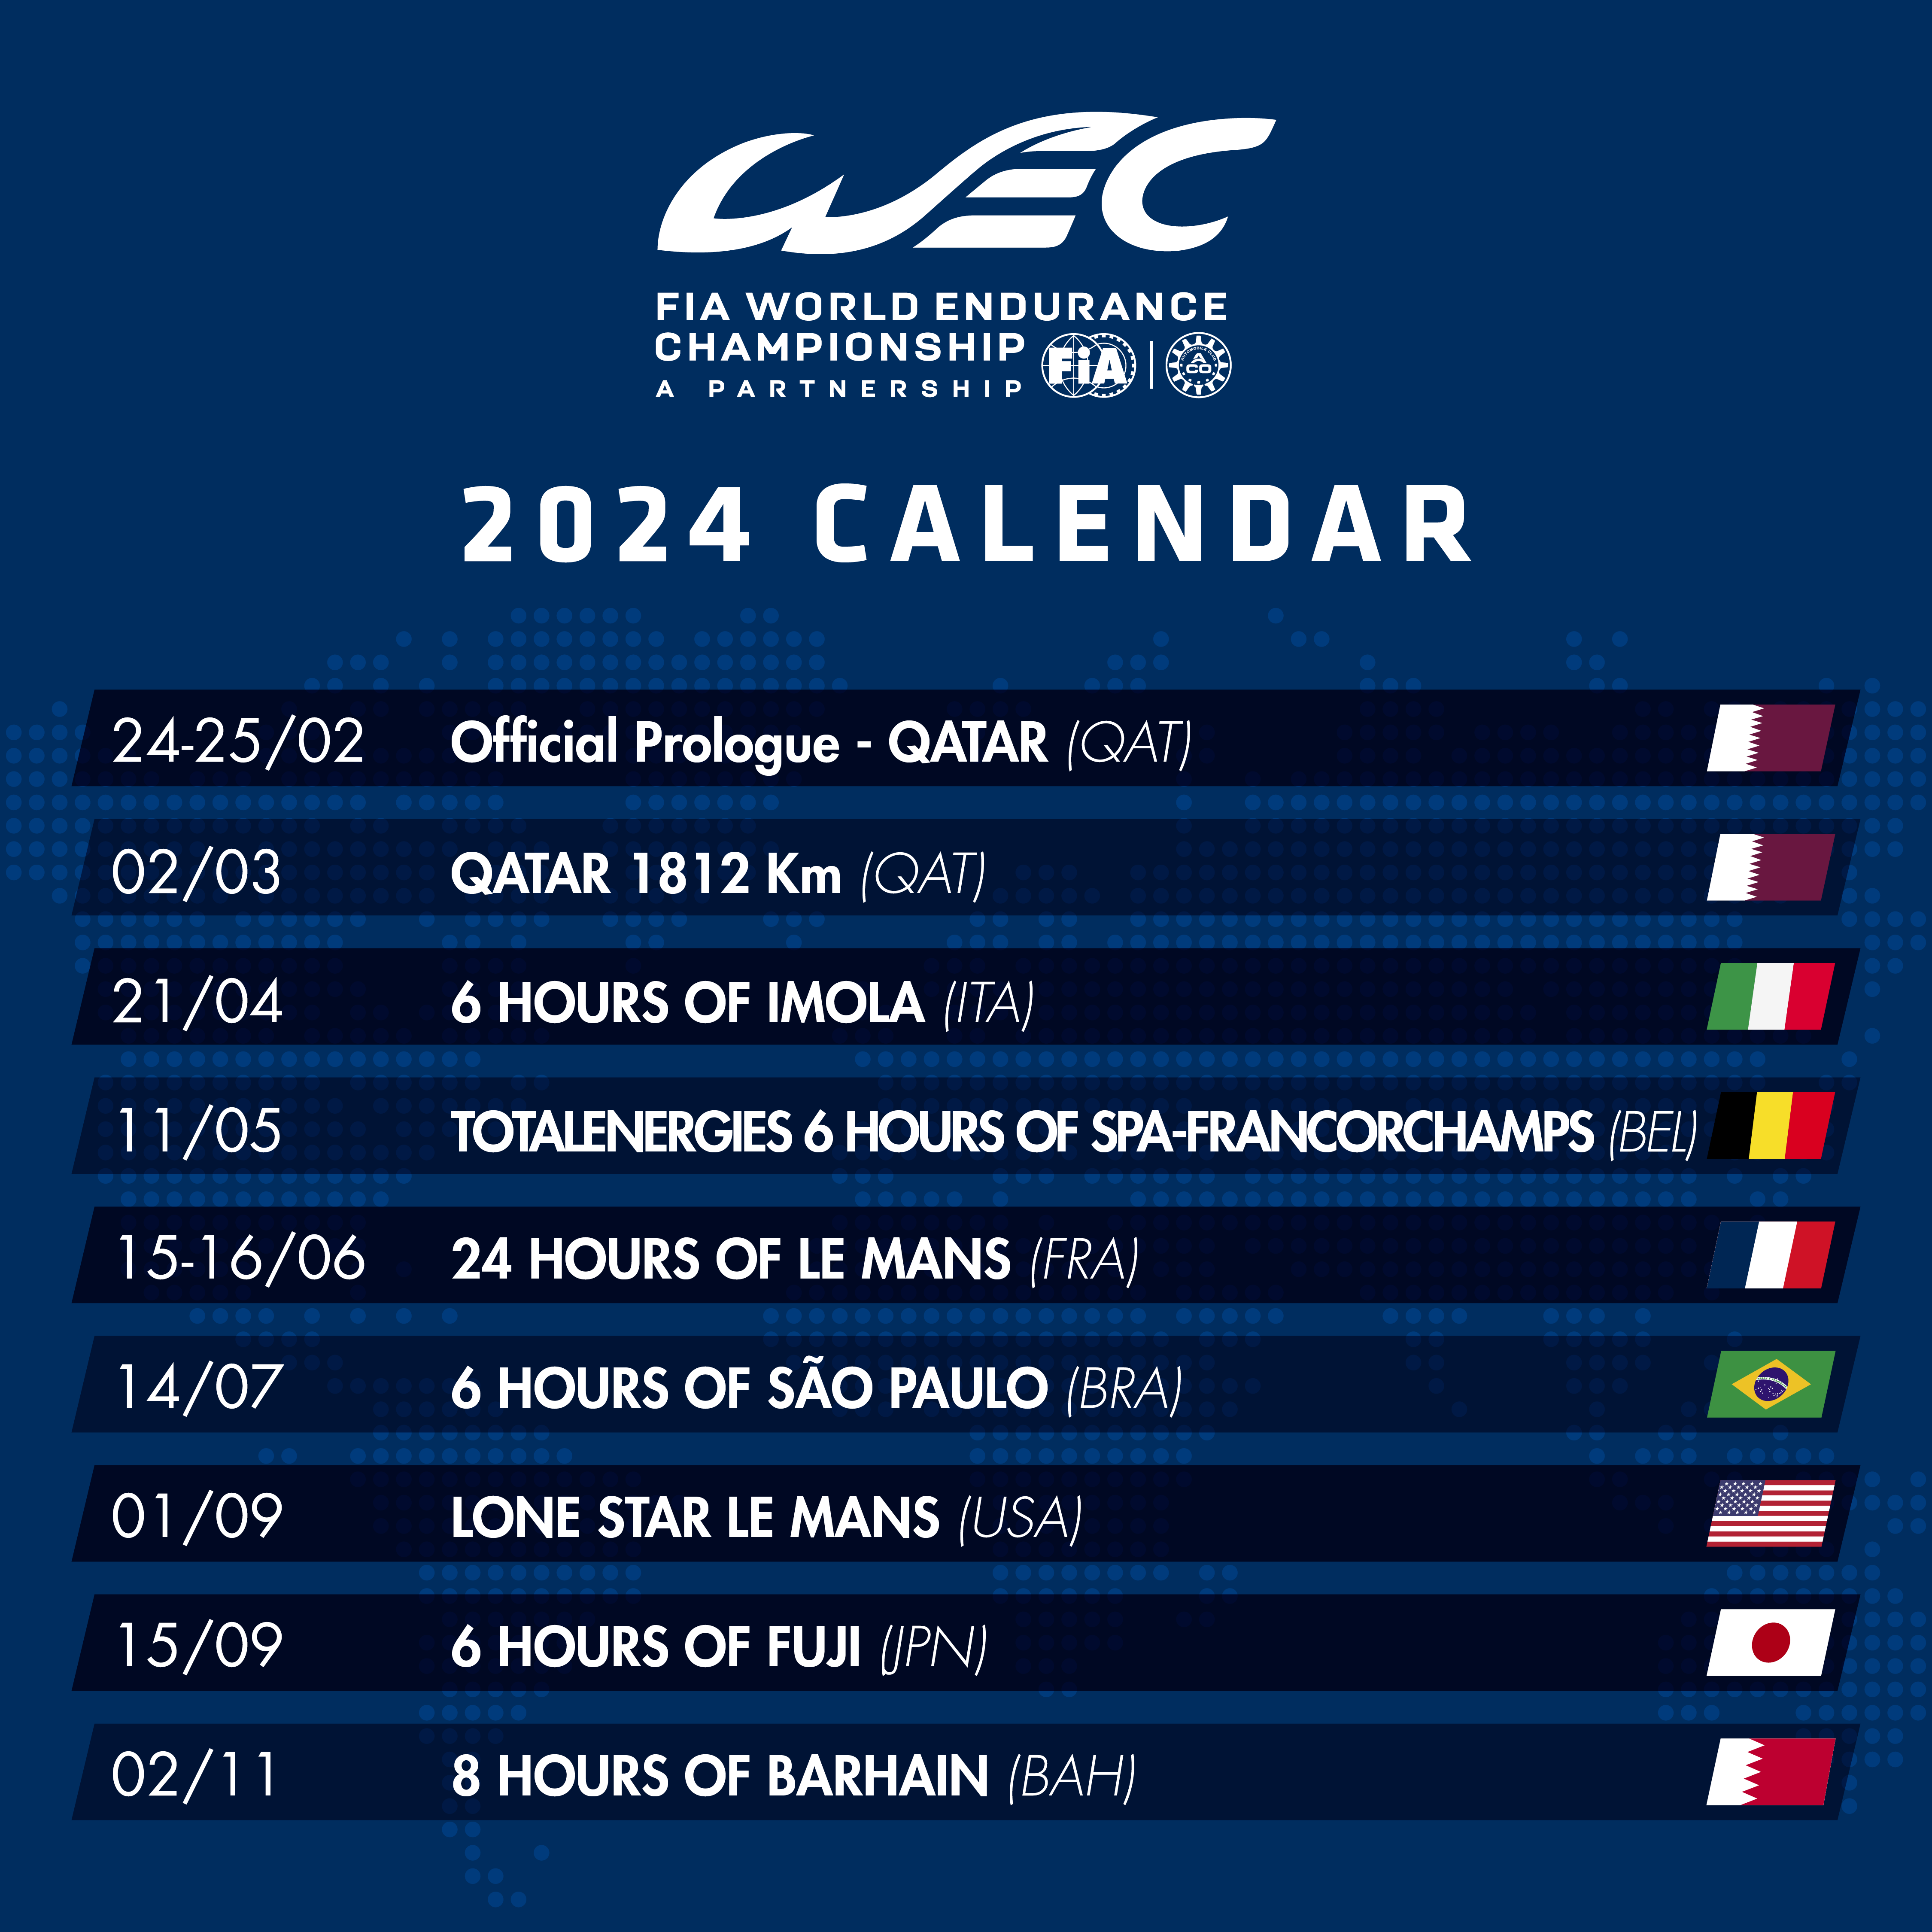 Total Race Timing  Sportlink Grand Prix 2024 races